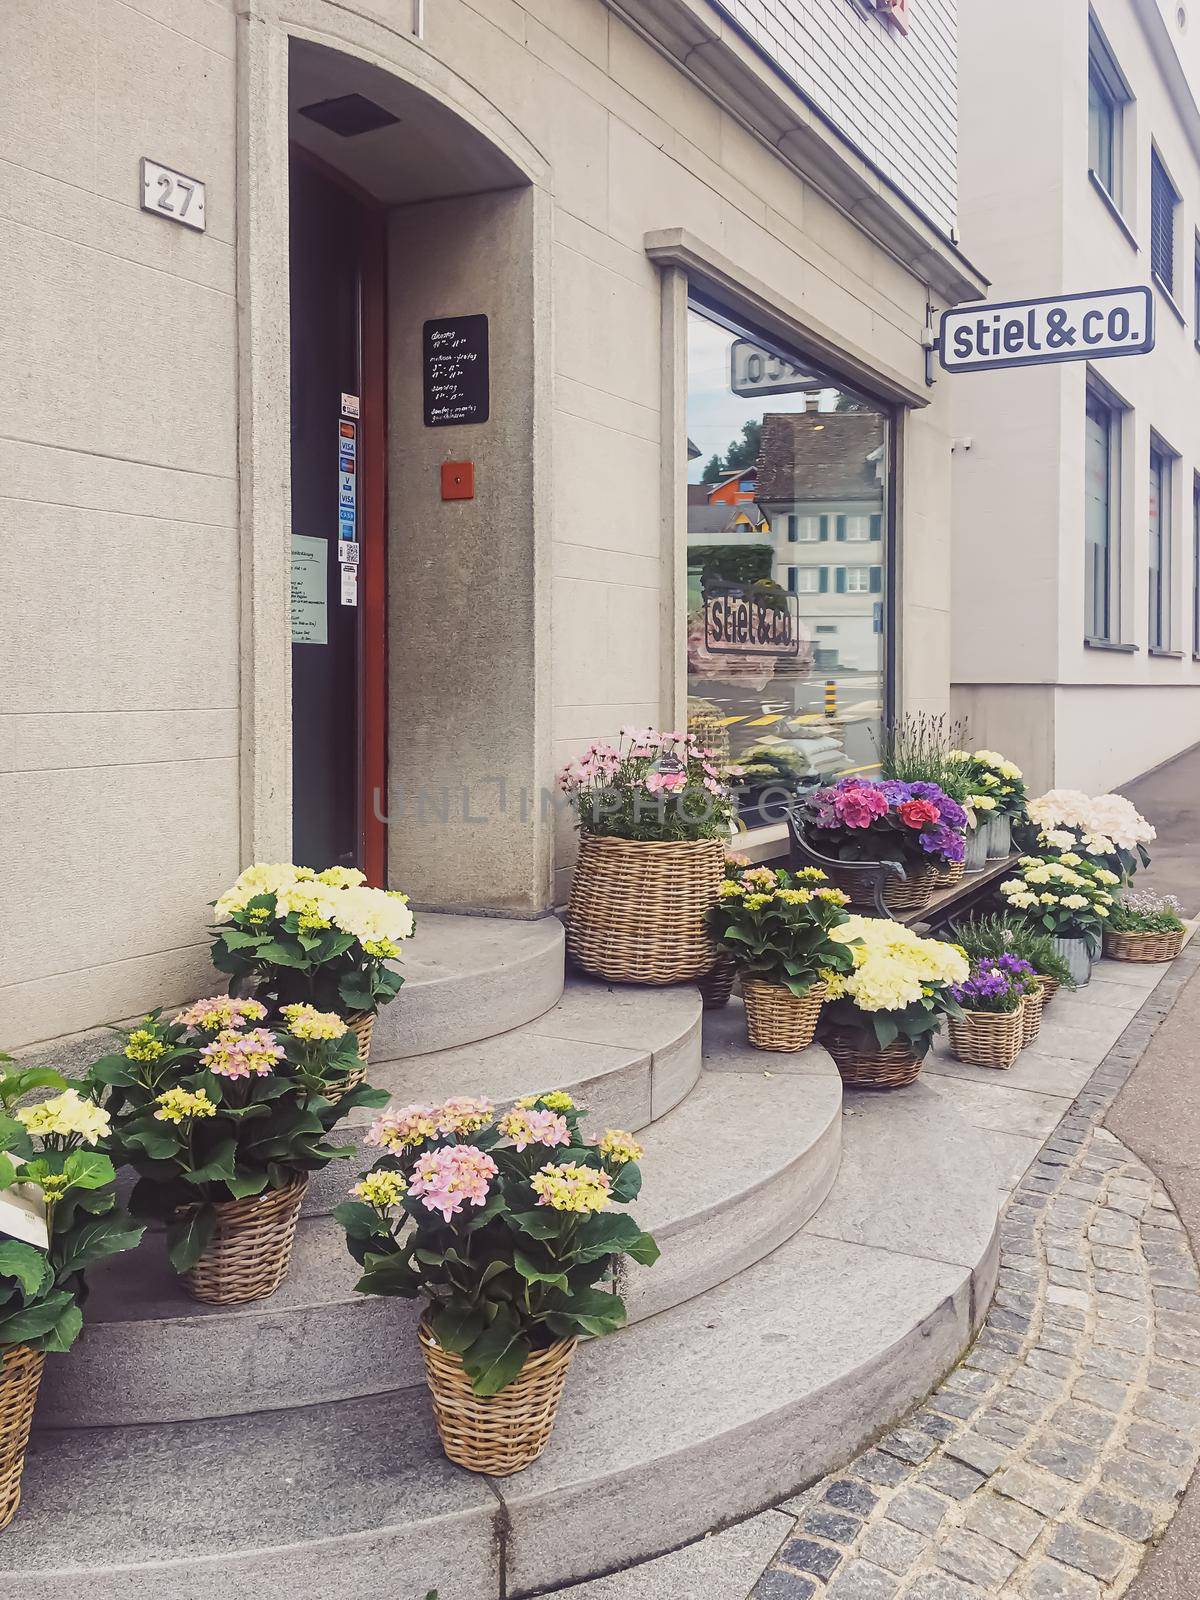 Flower shop on street of Wollerau, canton of Schwyz in Switzerland, Swiss architecture and real estate by Anneleven